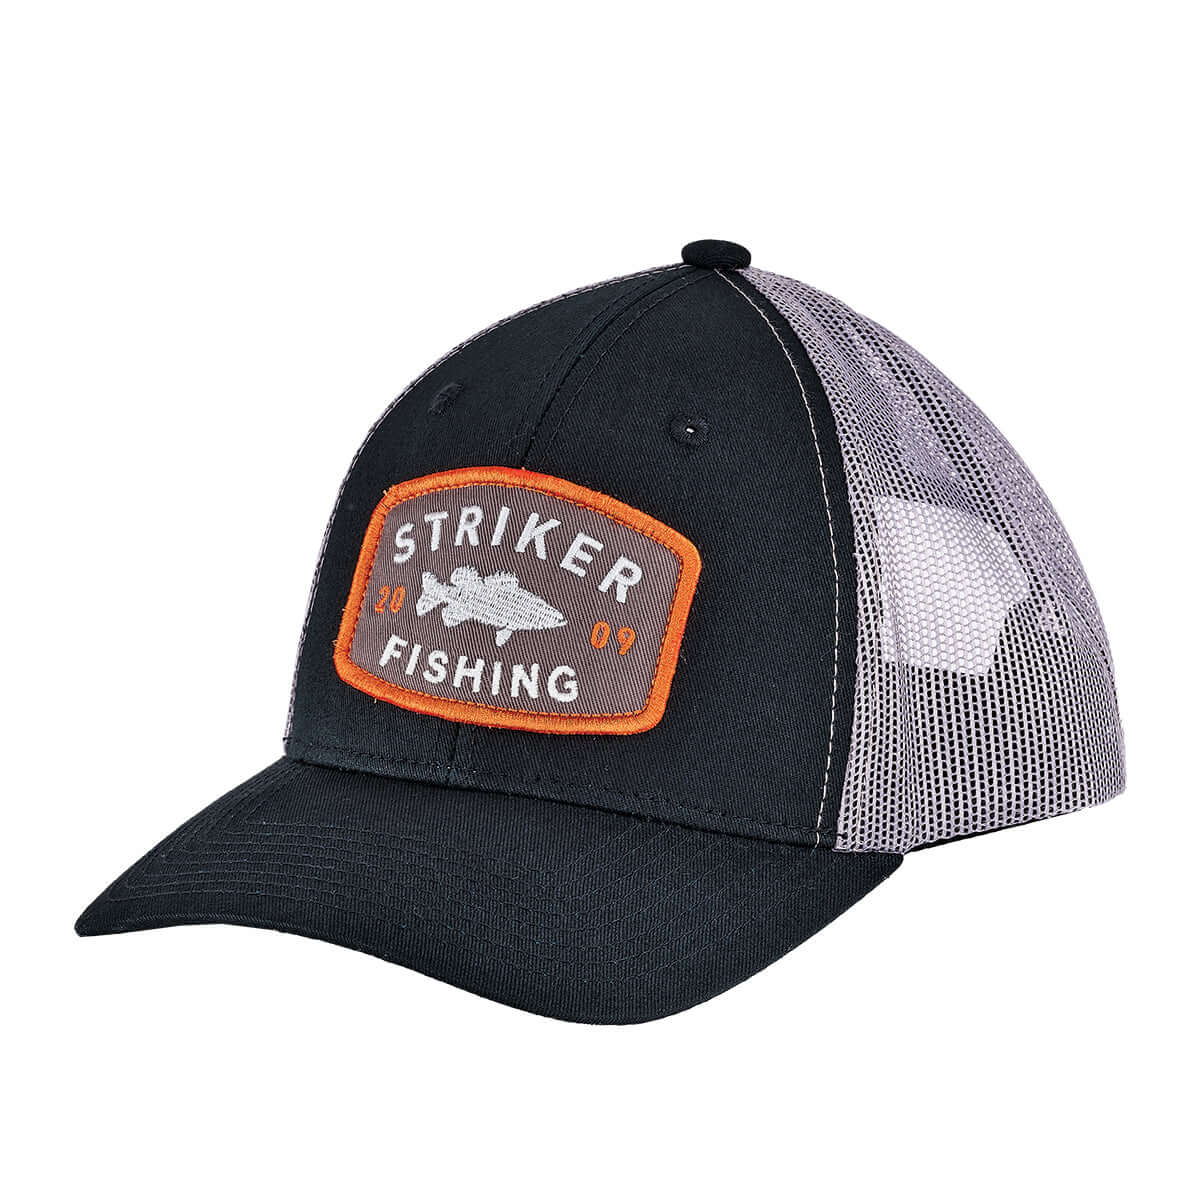 Striker, Motive Cap - Black/Charcoal